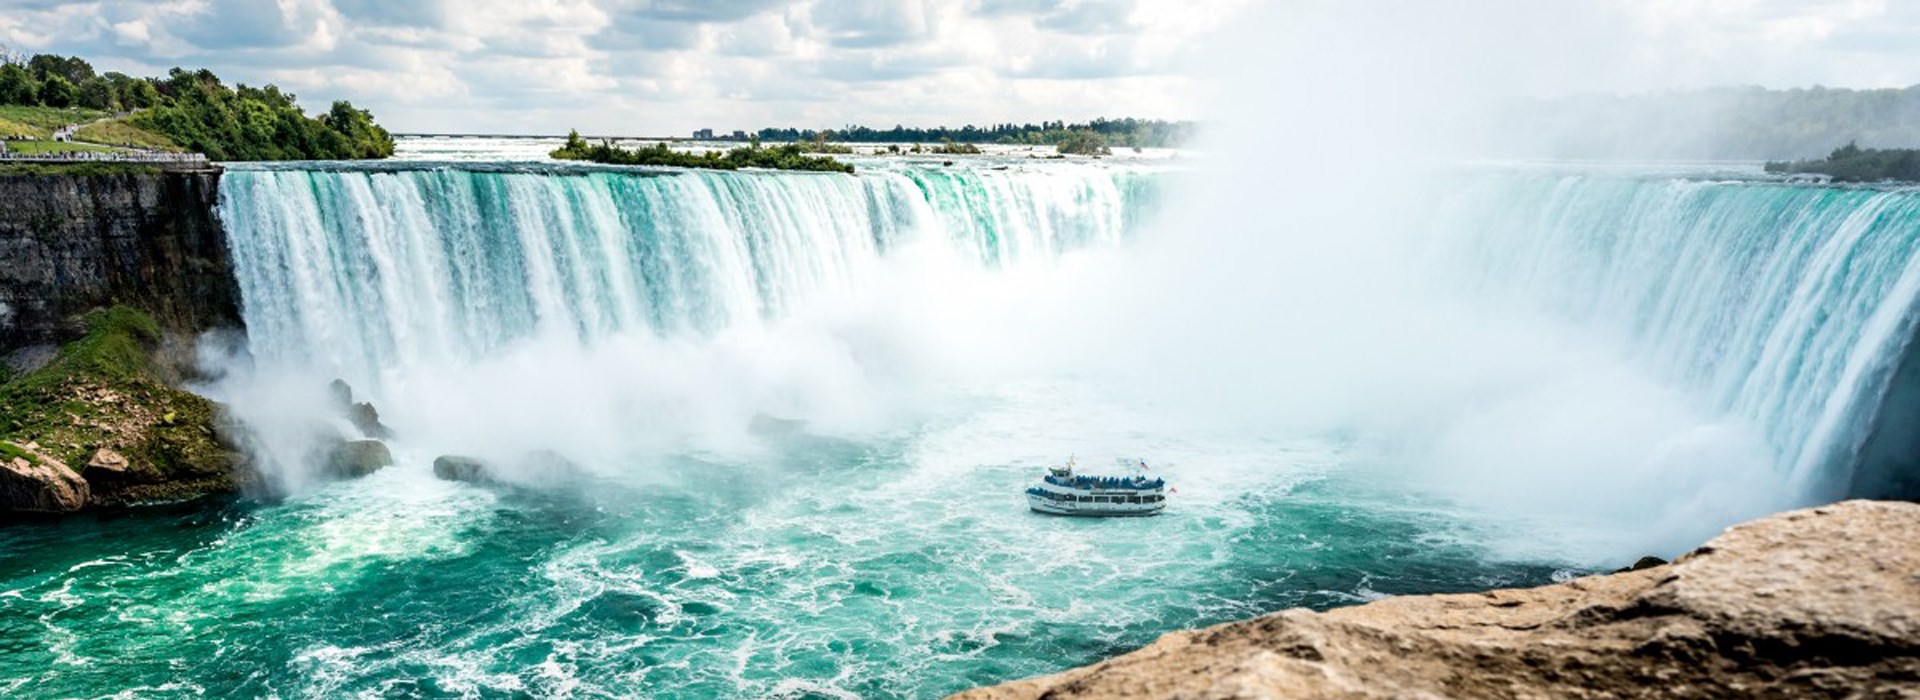 Visiter Les chutes du Niagara (Canada) - Etats-Unis - Canada